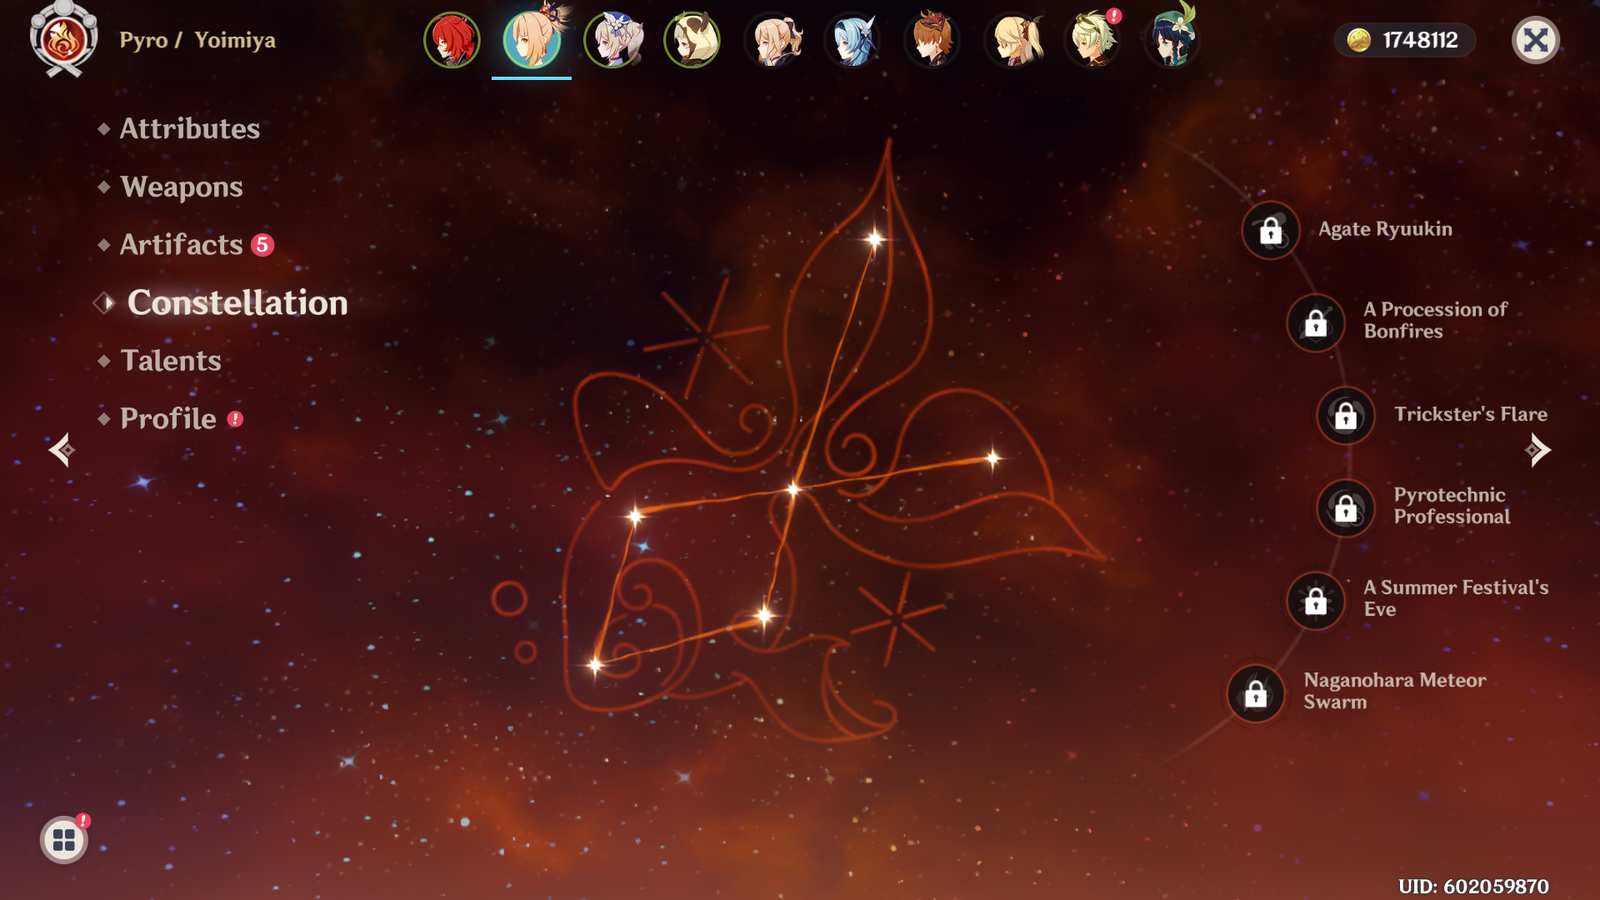 Yoimiya's Constellation screen